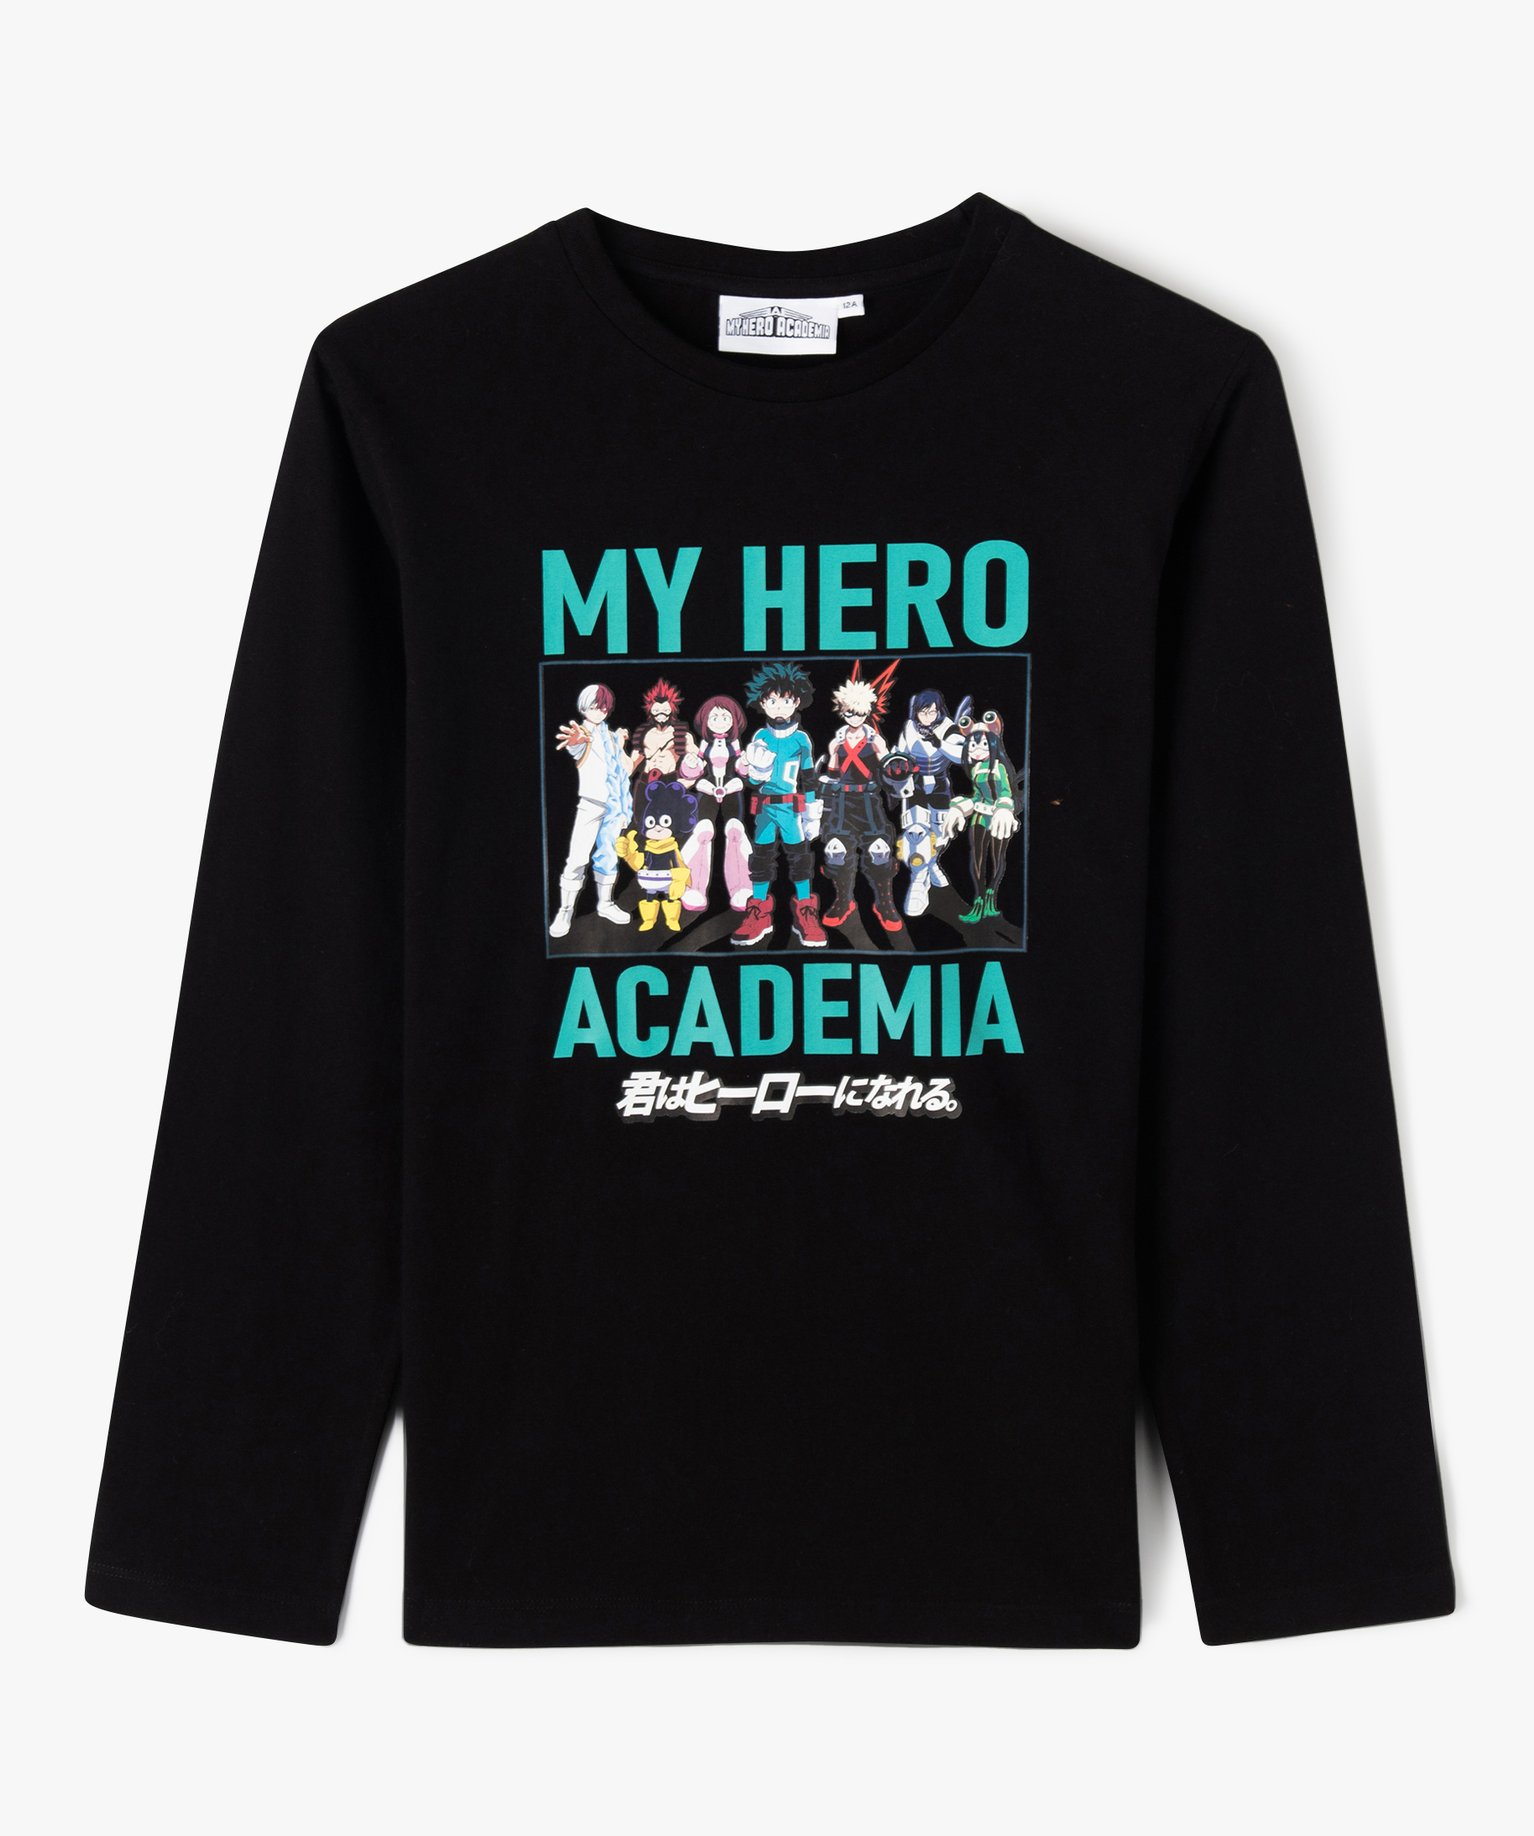 Tee-shirt garçon à manches longues avec motif - My Hero Acadomia - 4 - noir - MYHERO ACADEMIA